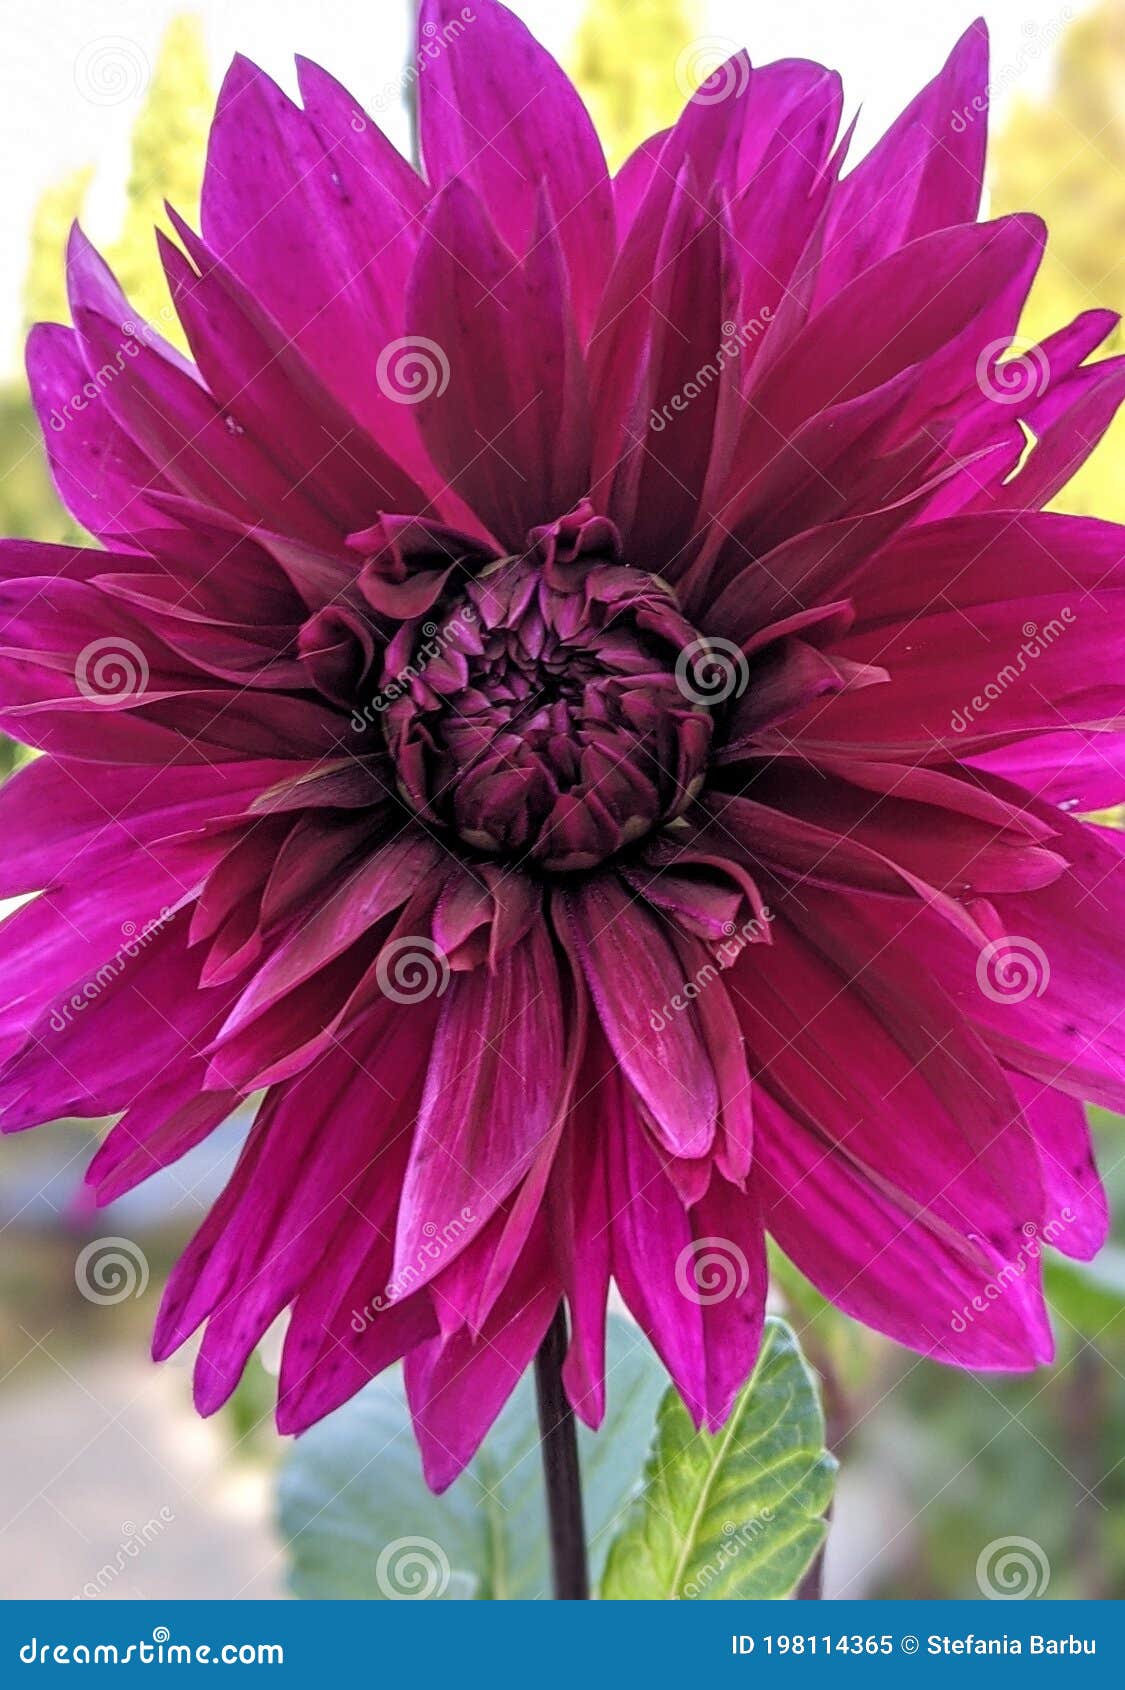 chrysanthemum purple flower